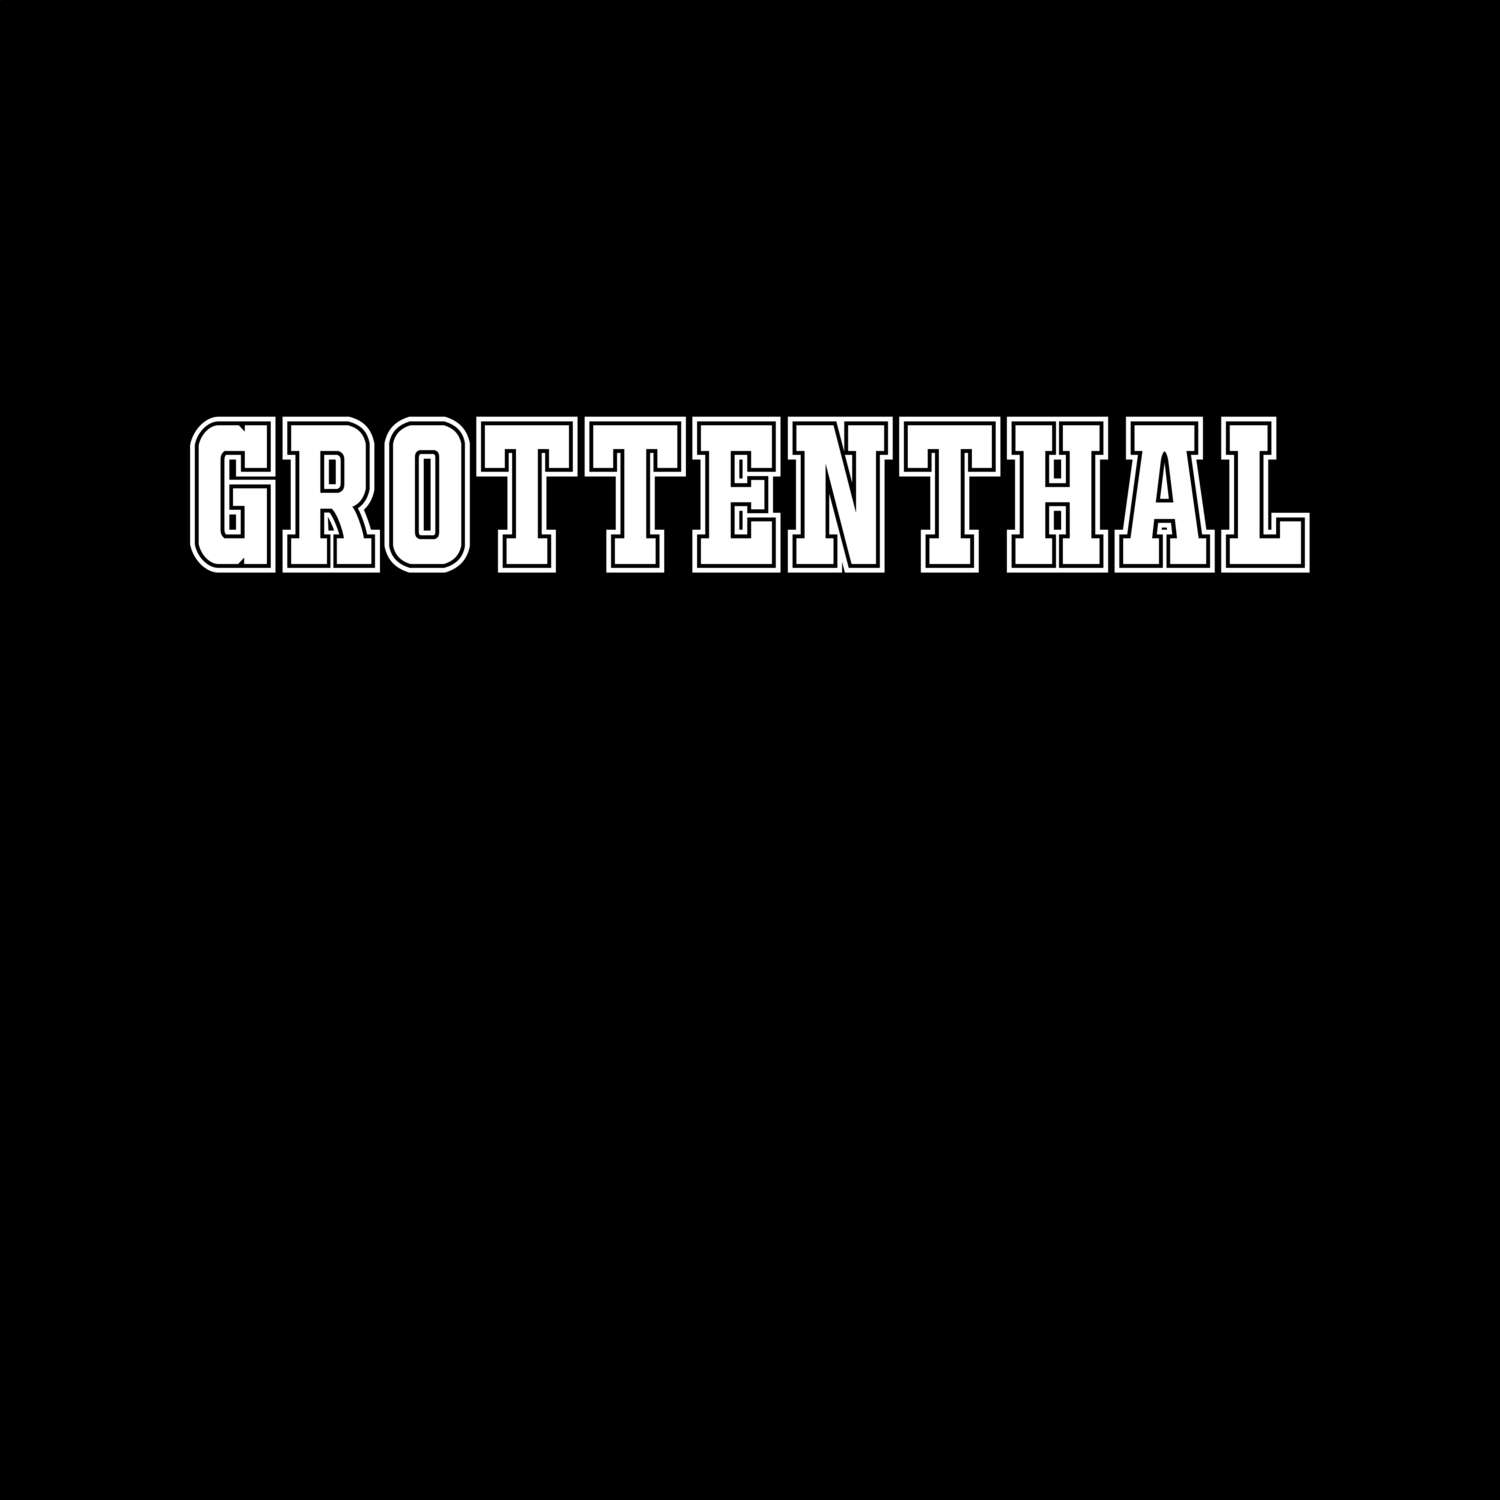 Grottenthal T-Shirt »Classic«